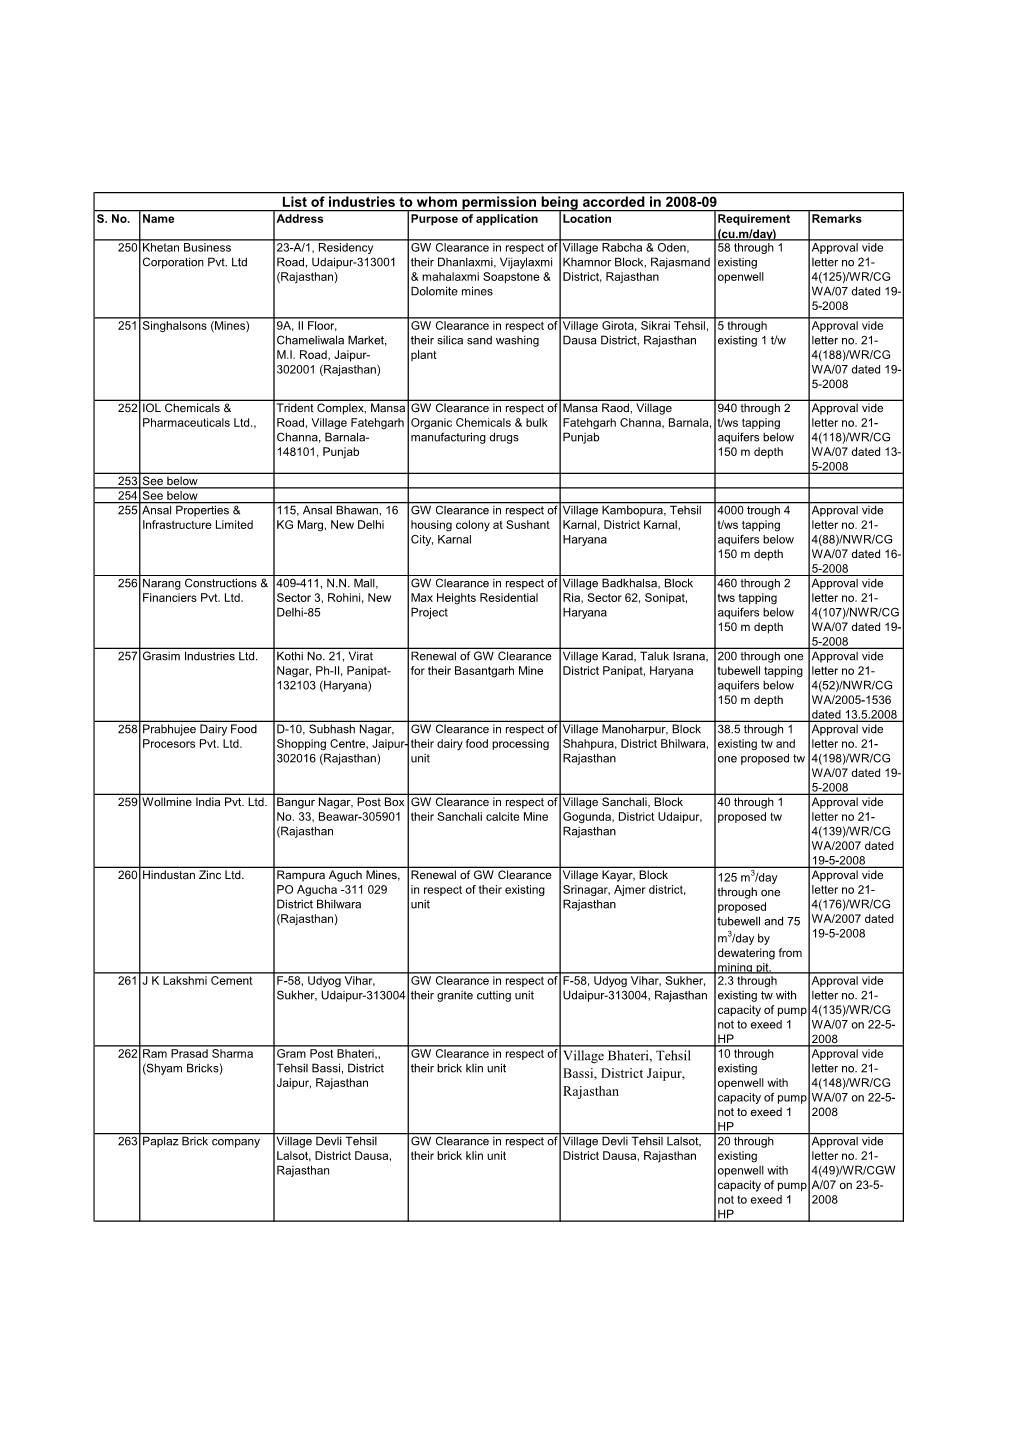 Village Bhateri, Tehsil Bassi, District Jaipur, Rajasthan List of Industries